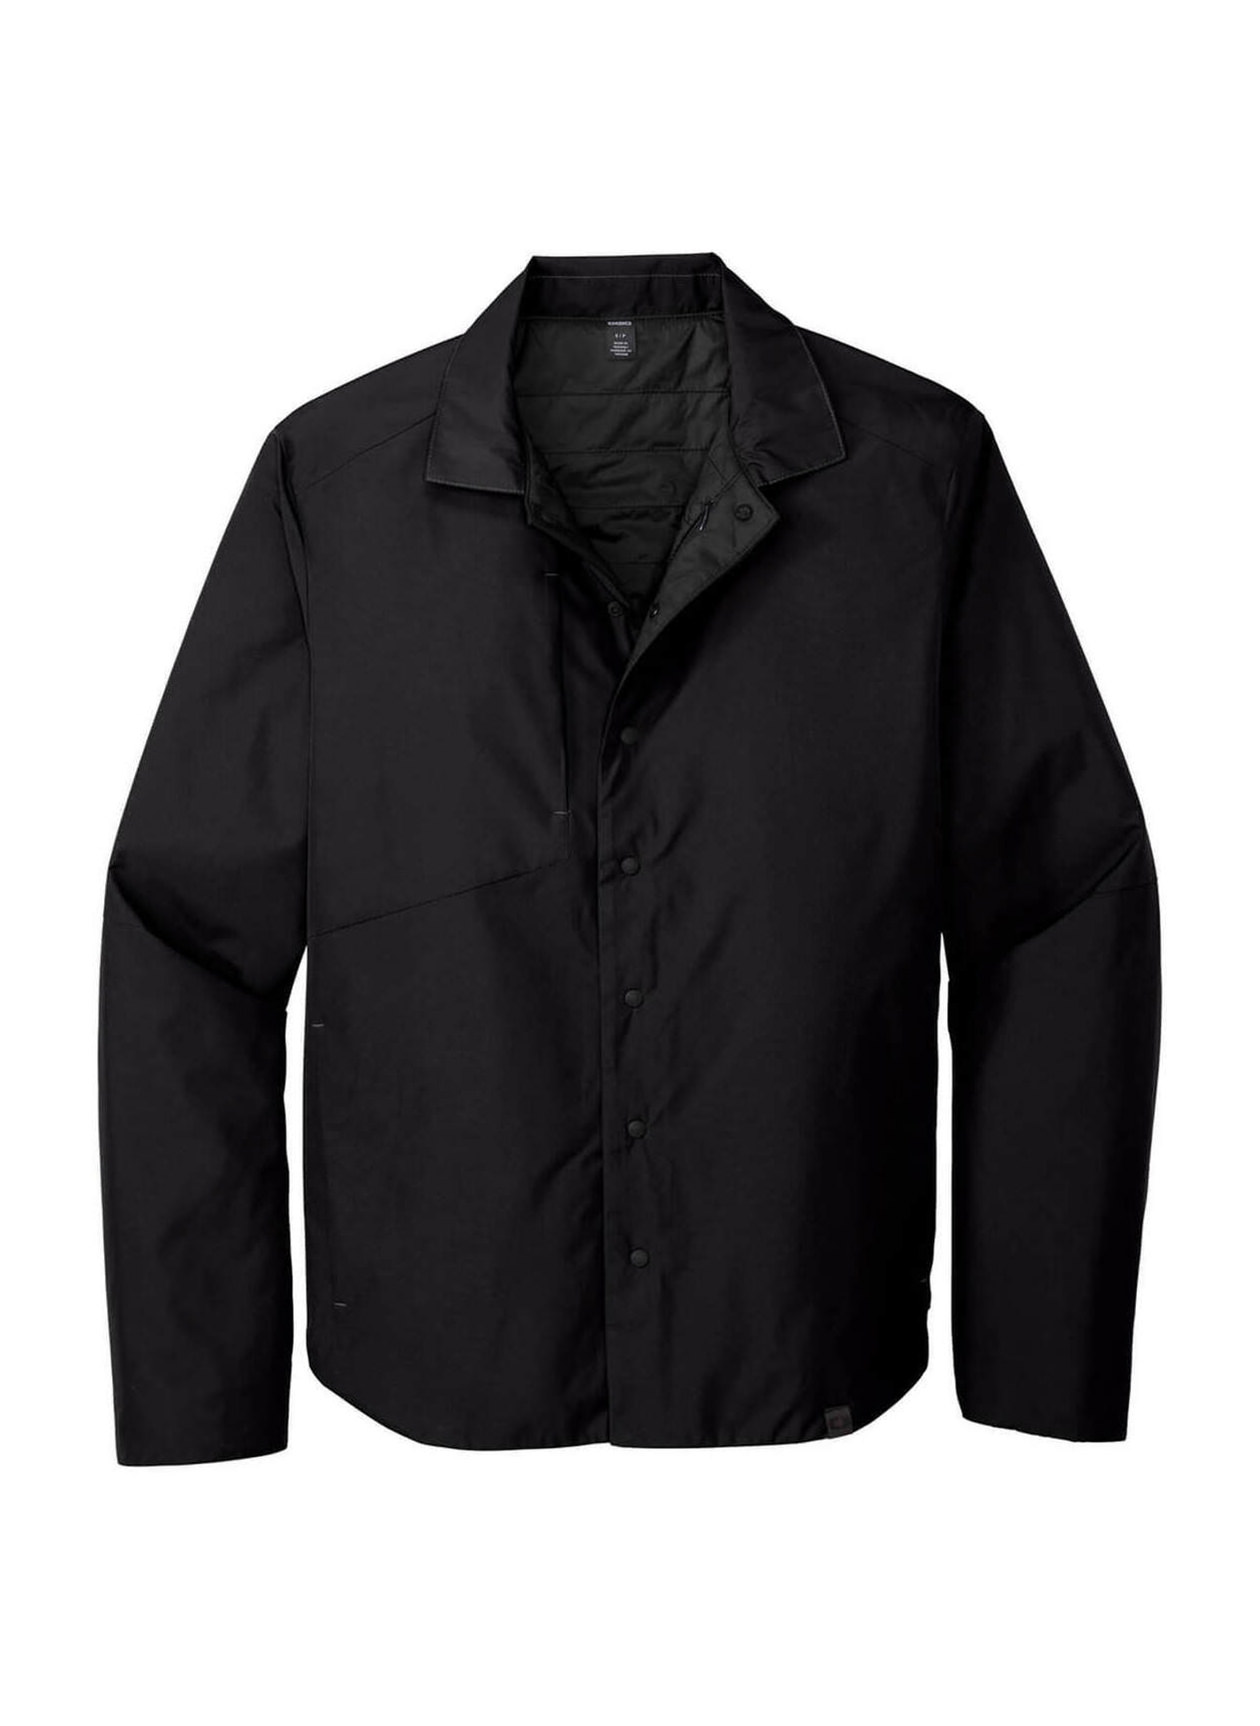 OGIO Men's Blacktop Reverse Shirt Jacket